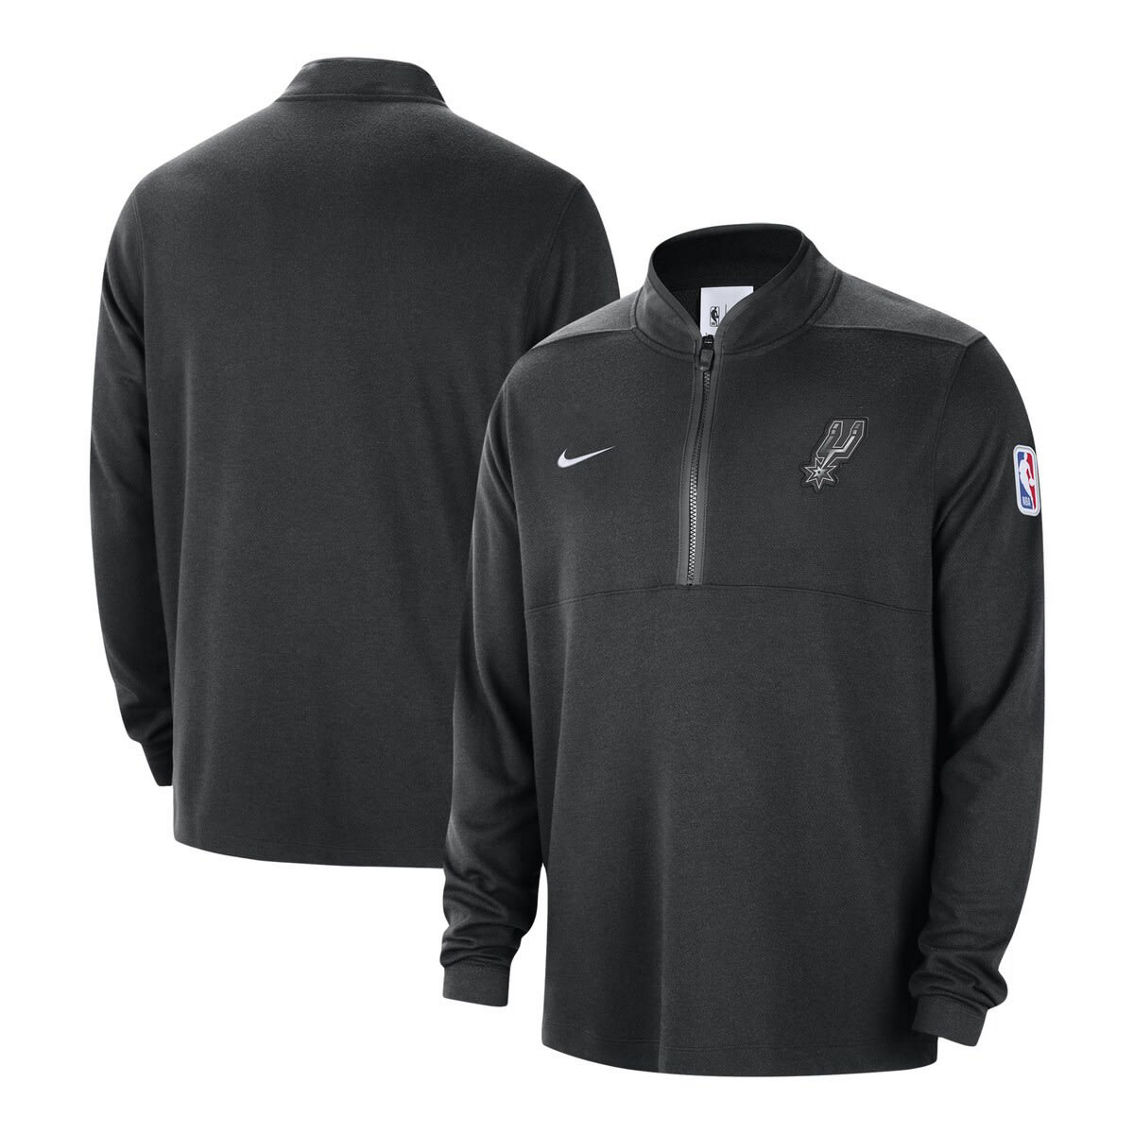 Nike Men's Black San Antonio Spurs Authentic Performance Half-Zip Jacket - Image 2 of 4